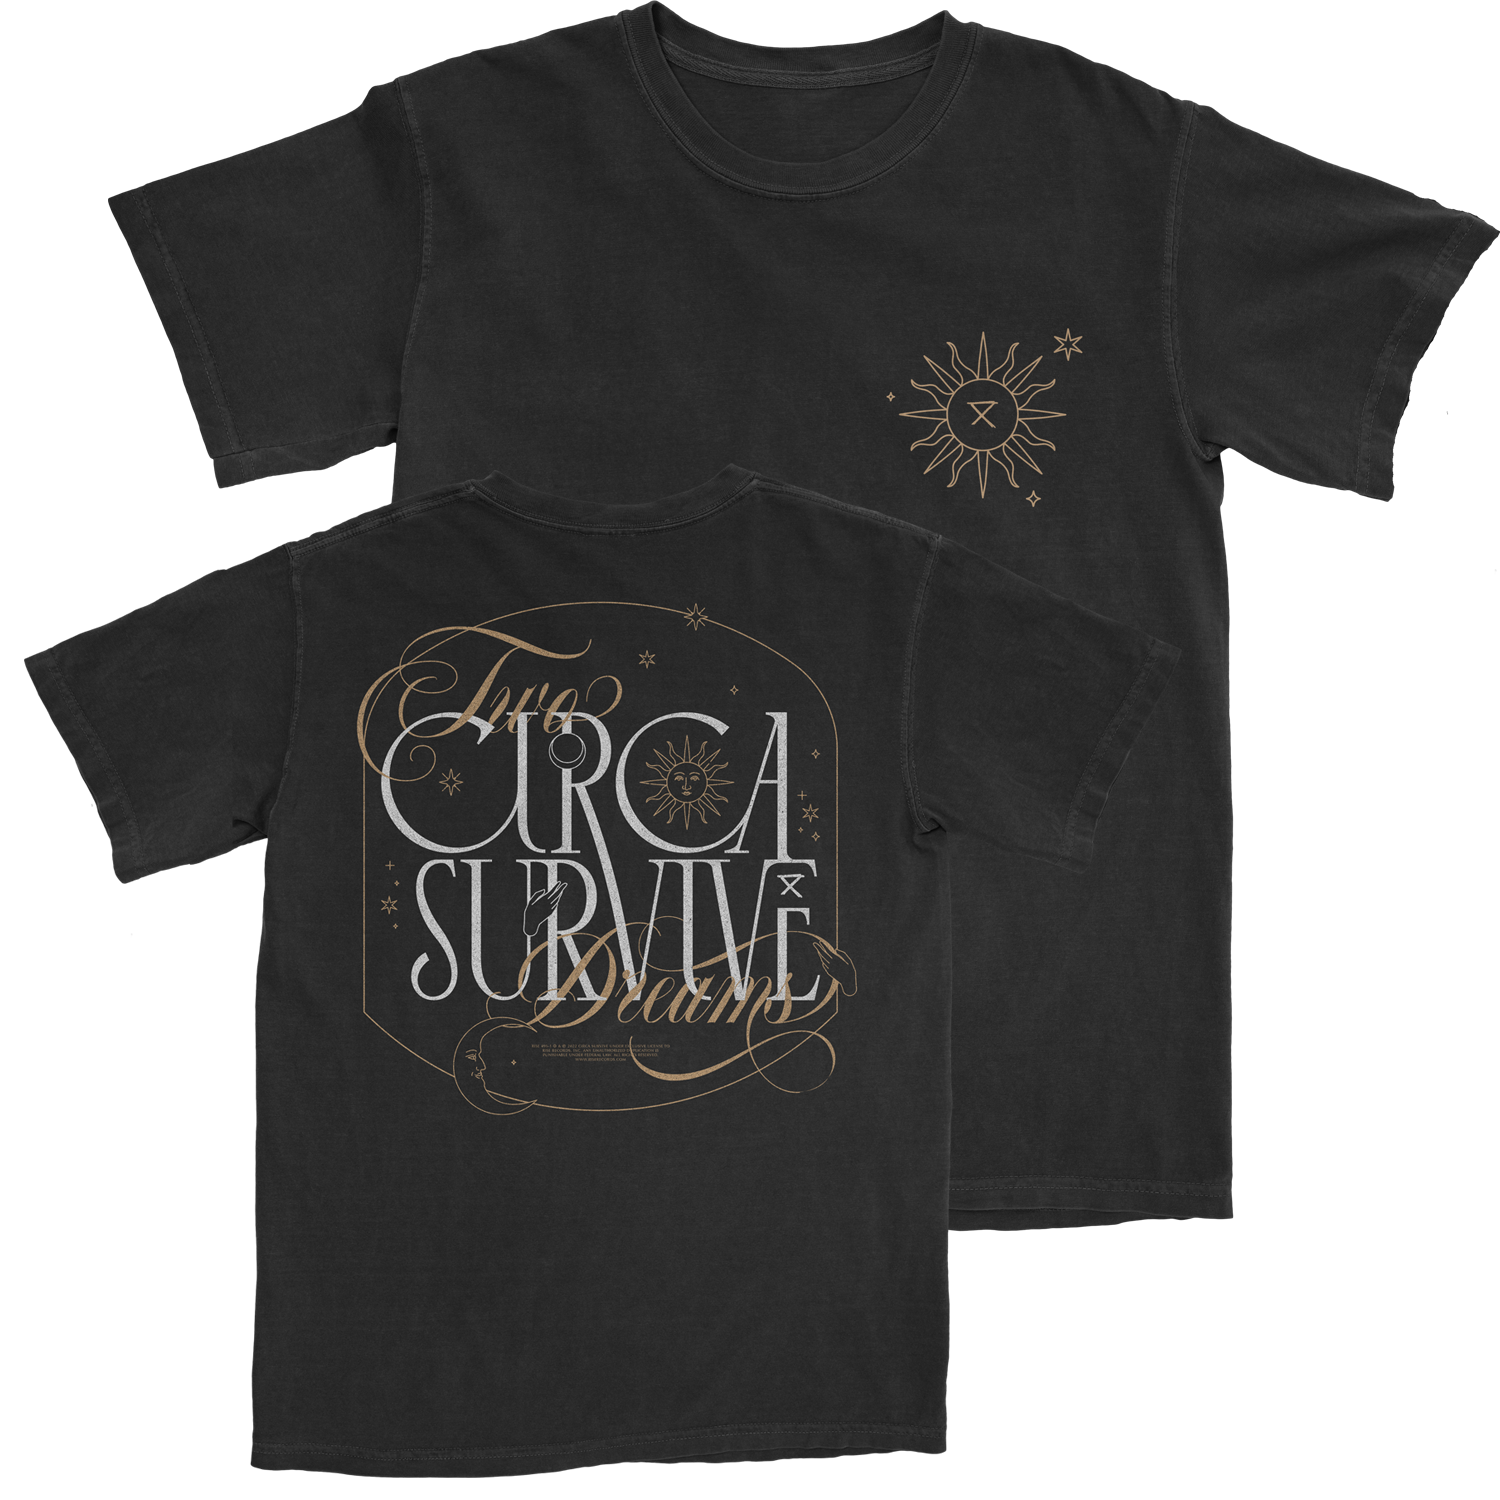 Two Dreams Shirt – Circa Survive